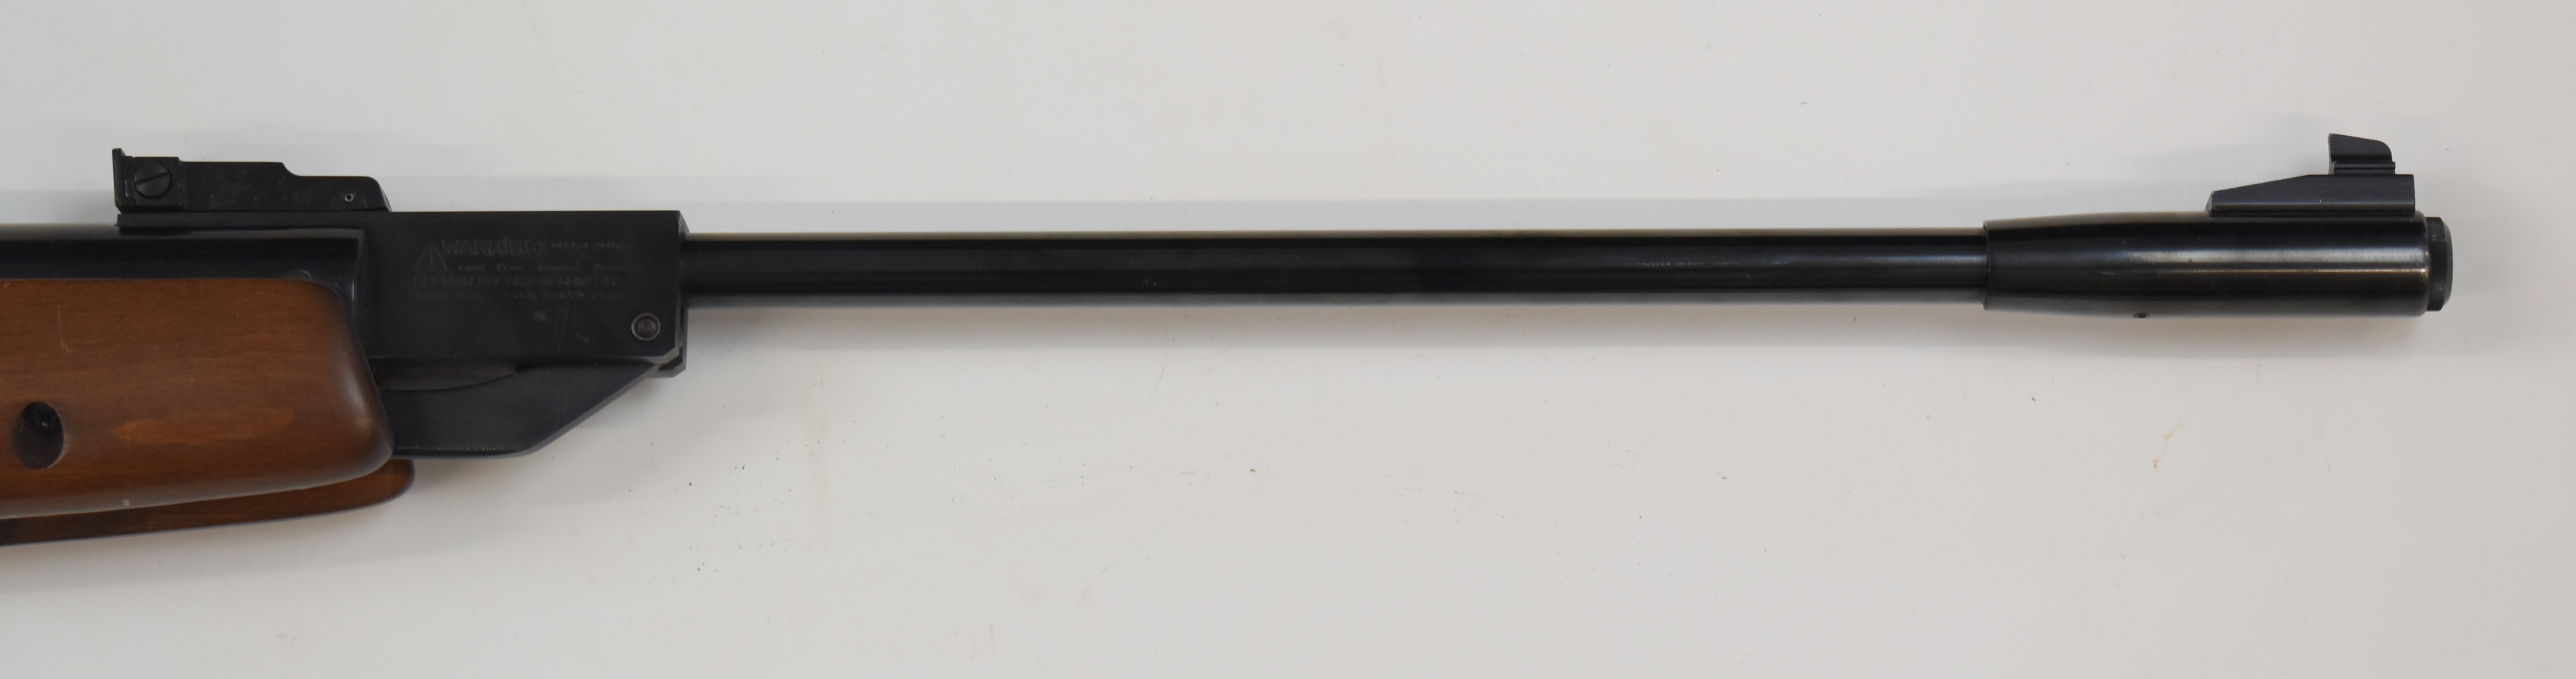 Beeman Kodiak .25 FAC air rifle with chequered semi-pistol grip, raised cheek piece, adjustable - Image 5 of 10